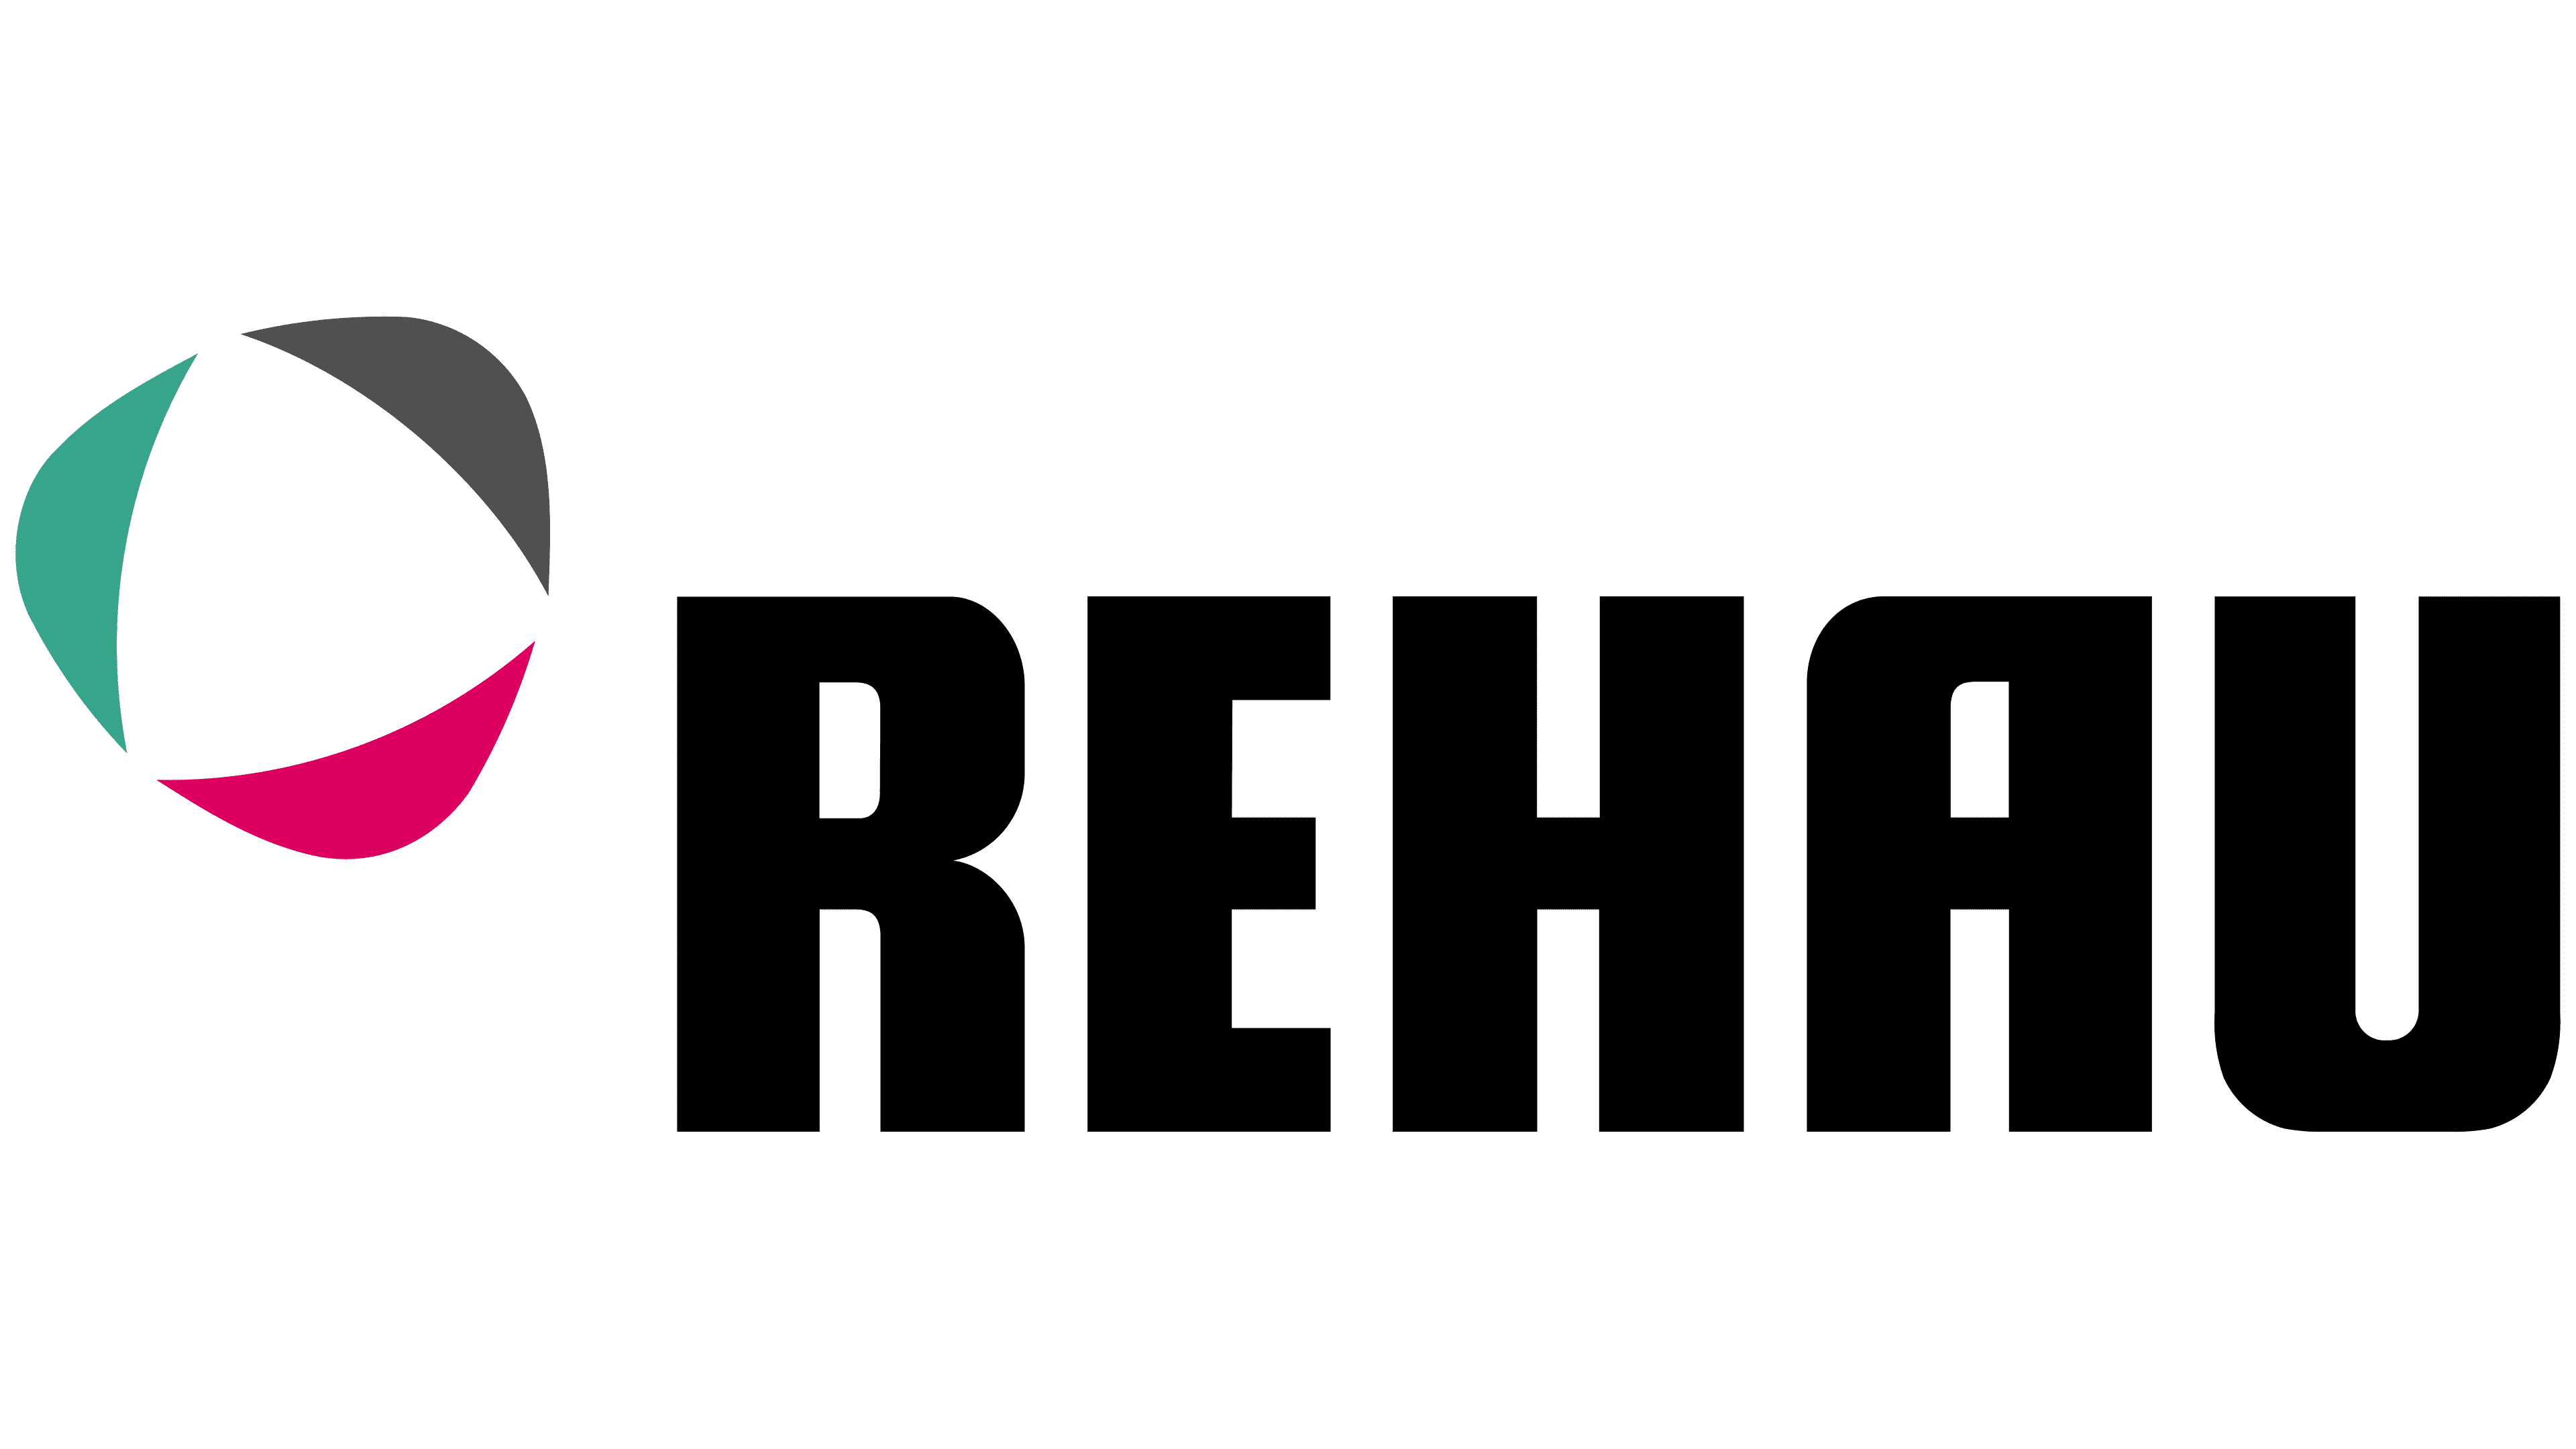 Rehau Logo